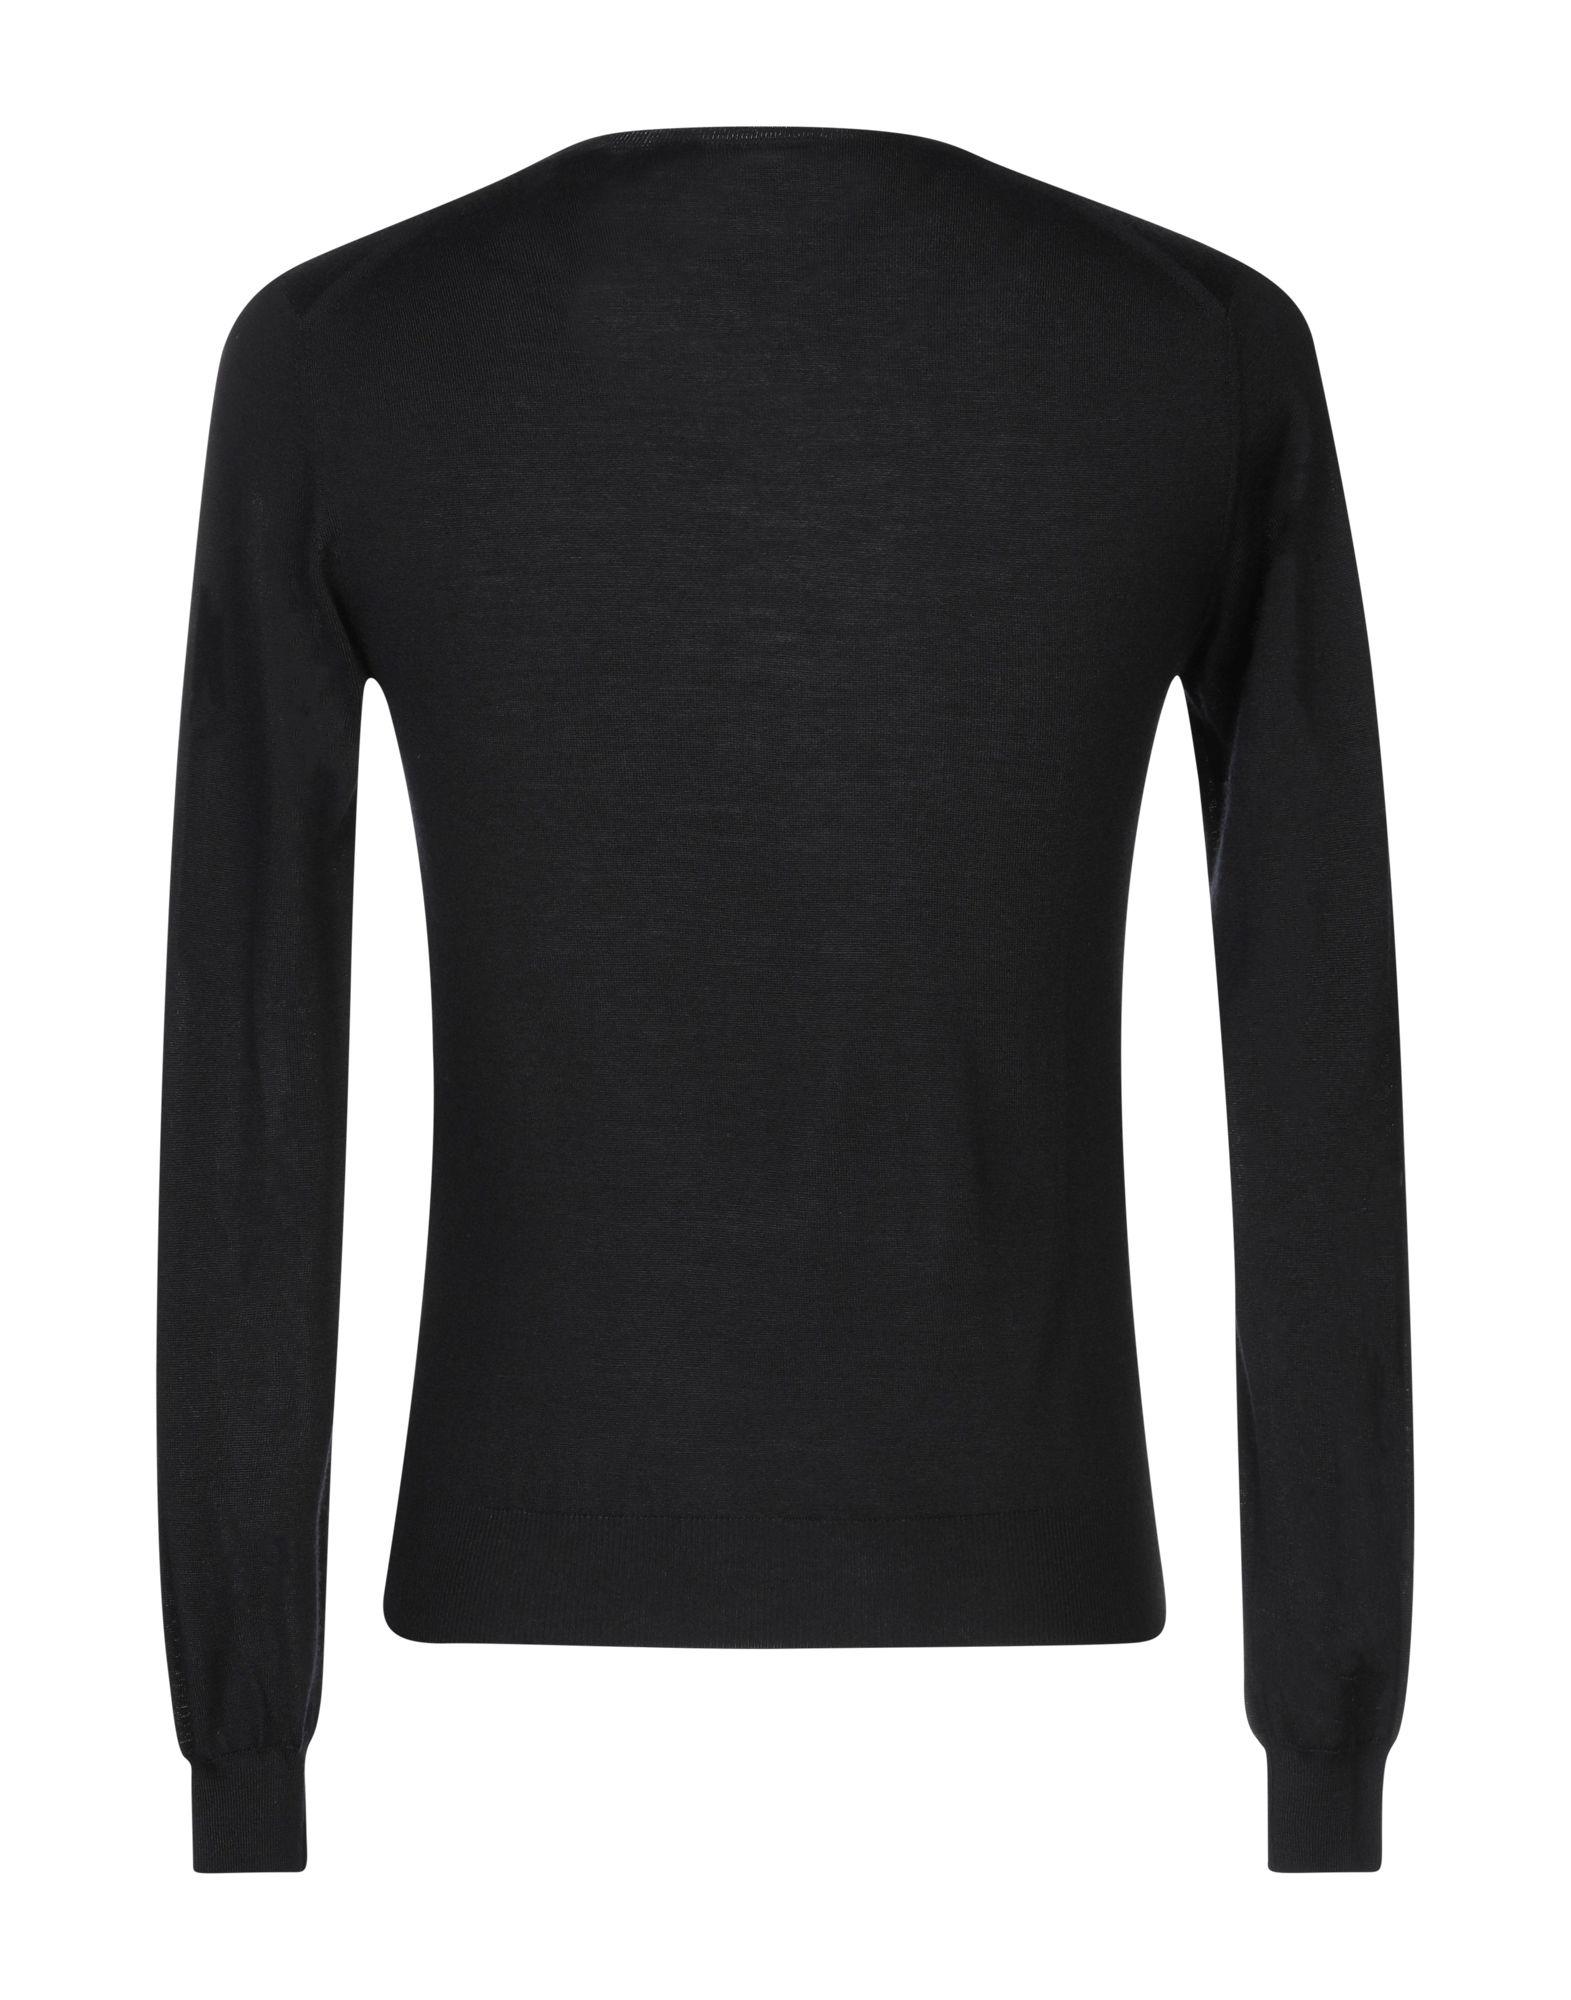 Prada Sweater in Black for Men - Lyst